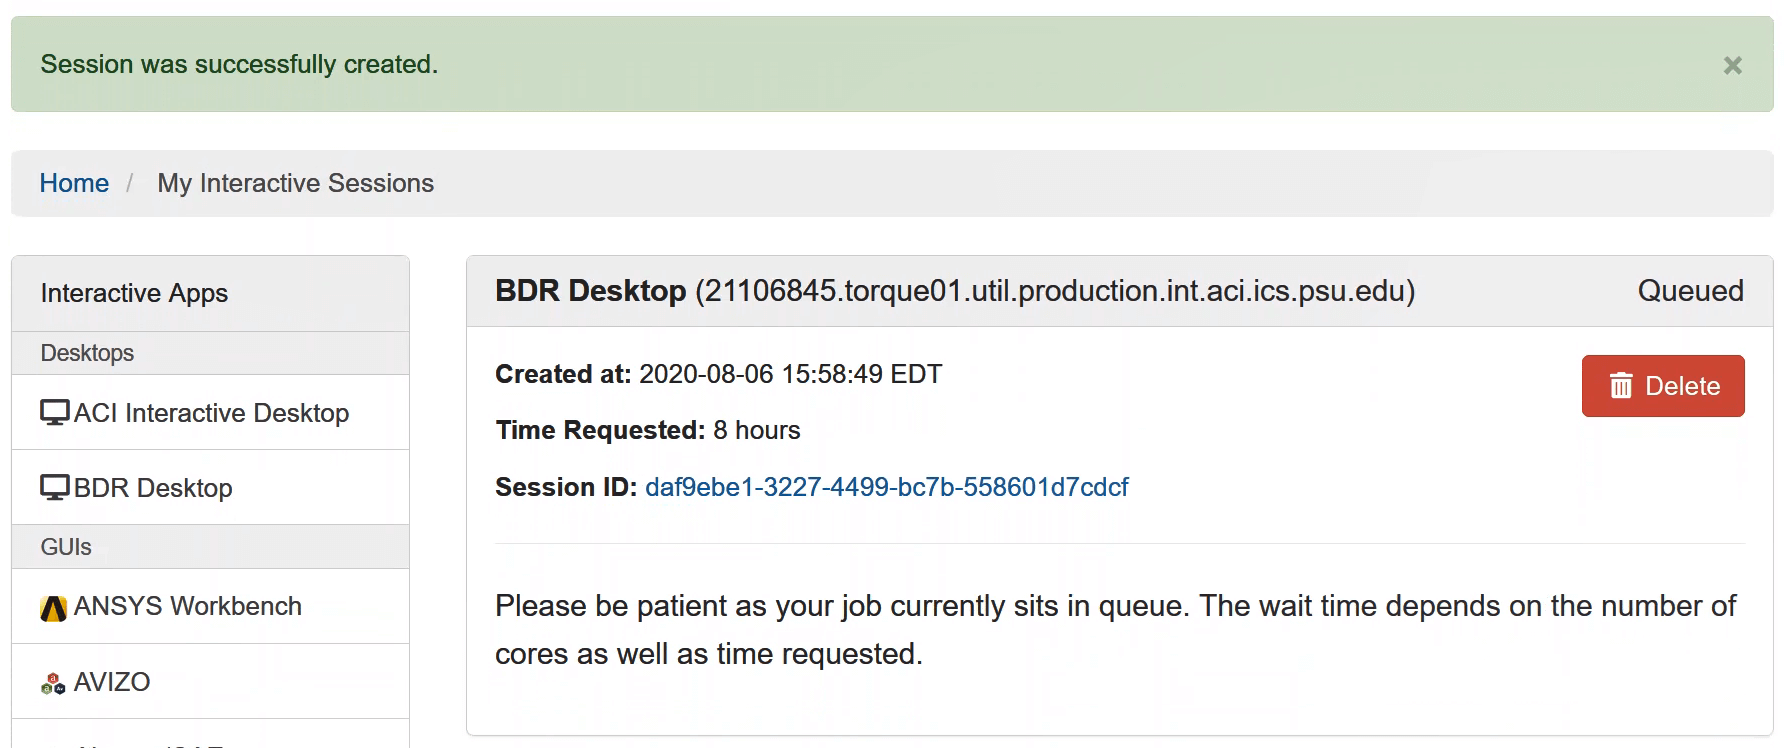 BDR Desktop session queued